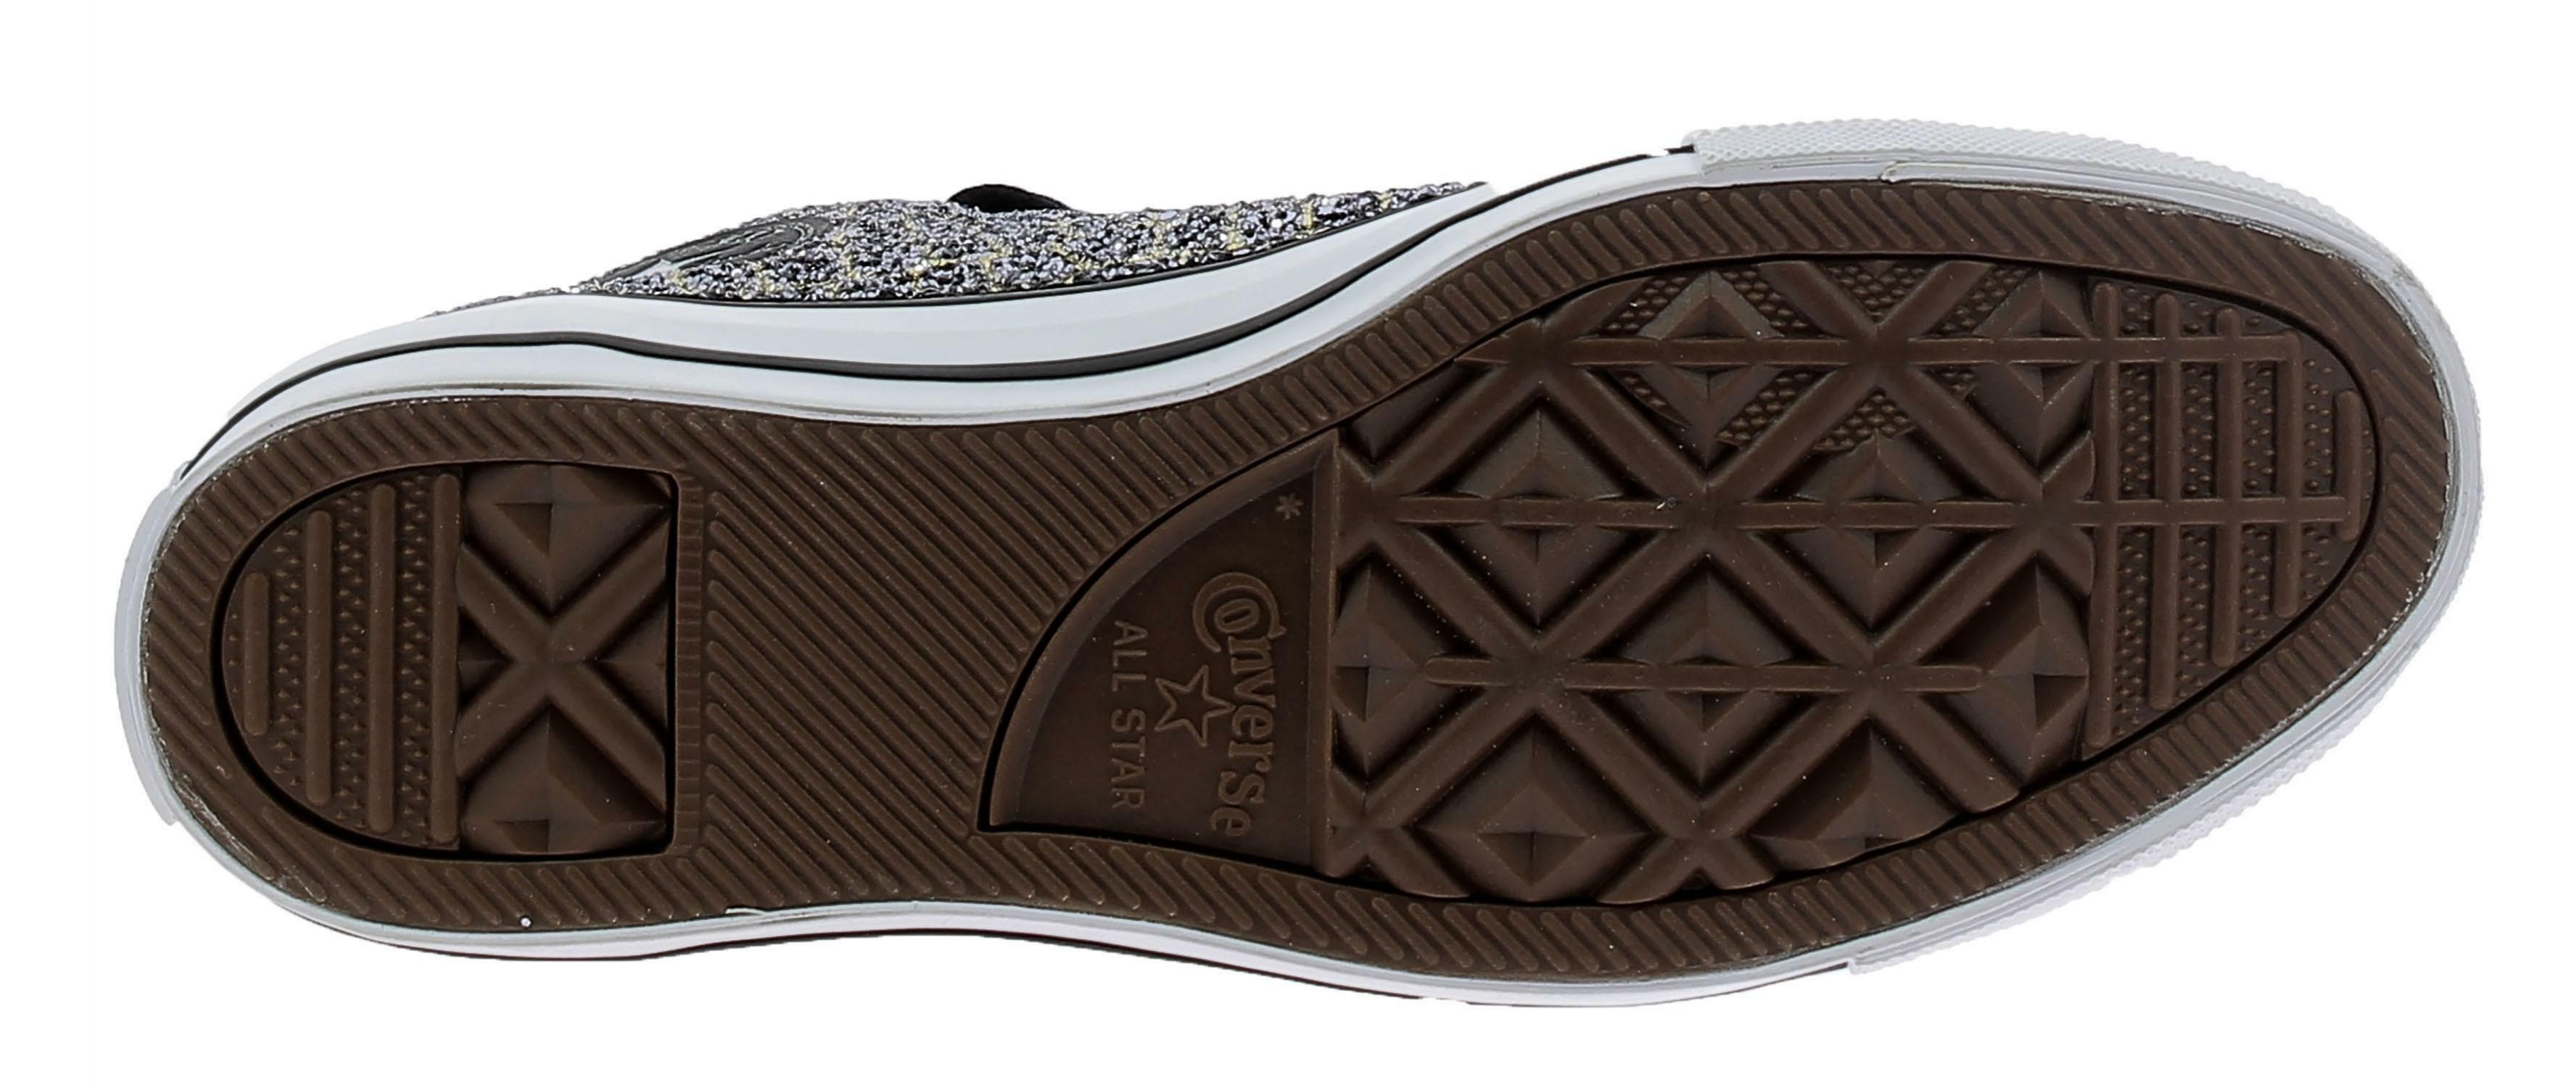 converse converse scarpe sportive limited edition grigie glitterate 162898c